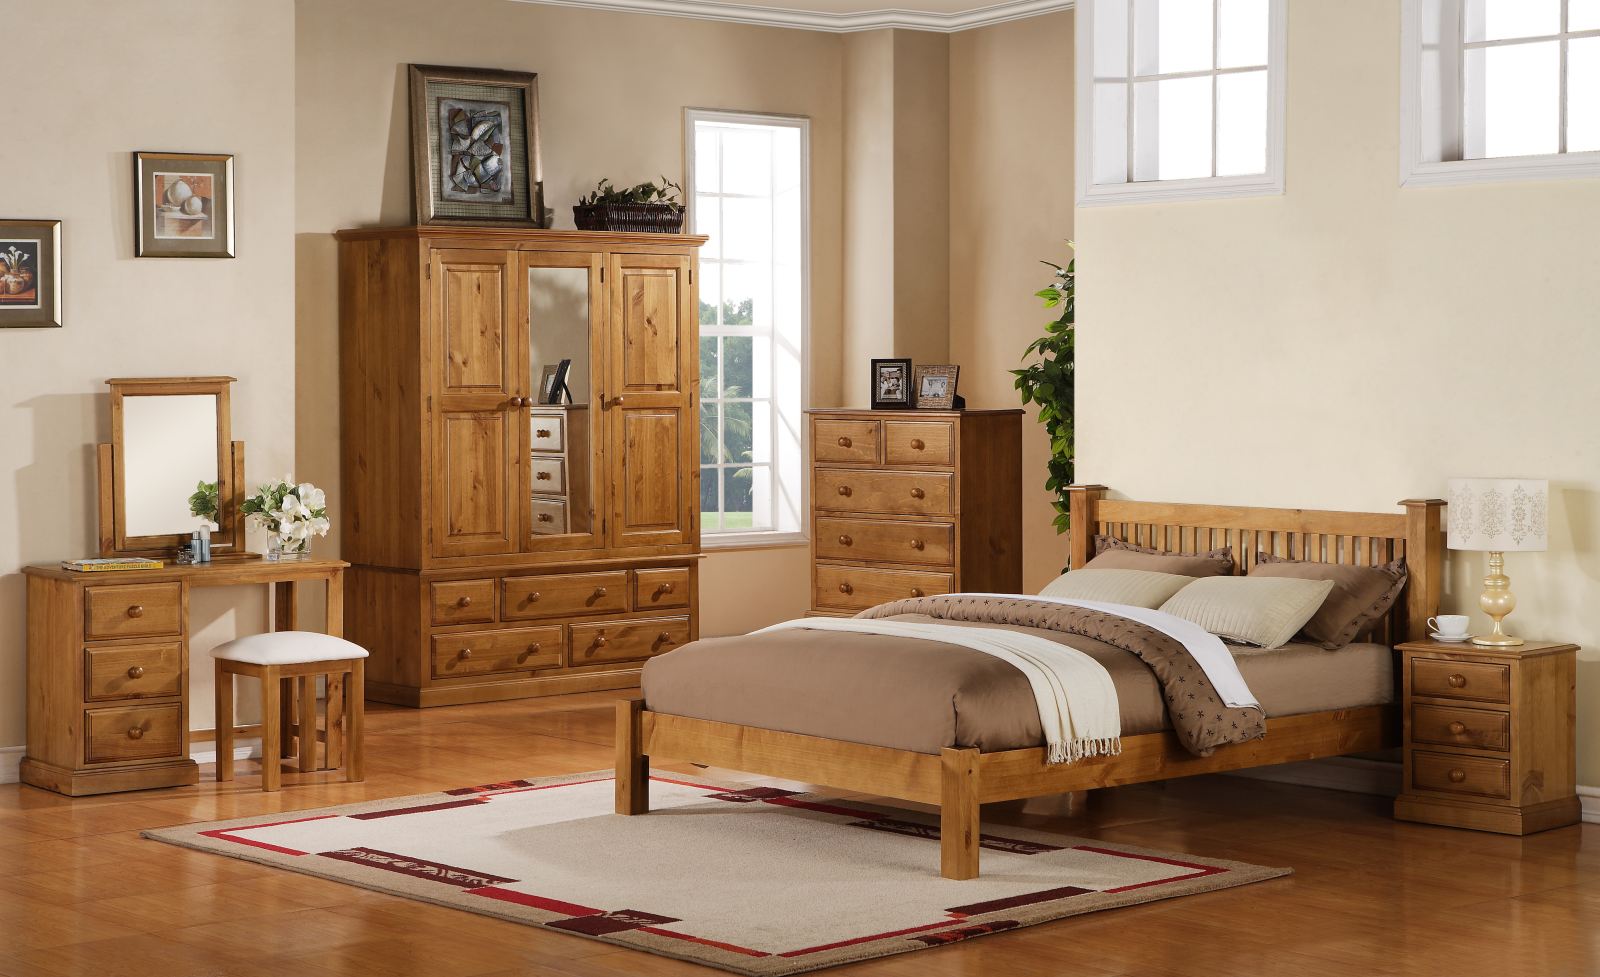 maya pine bedroom furniture